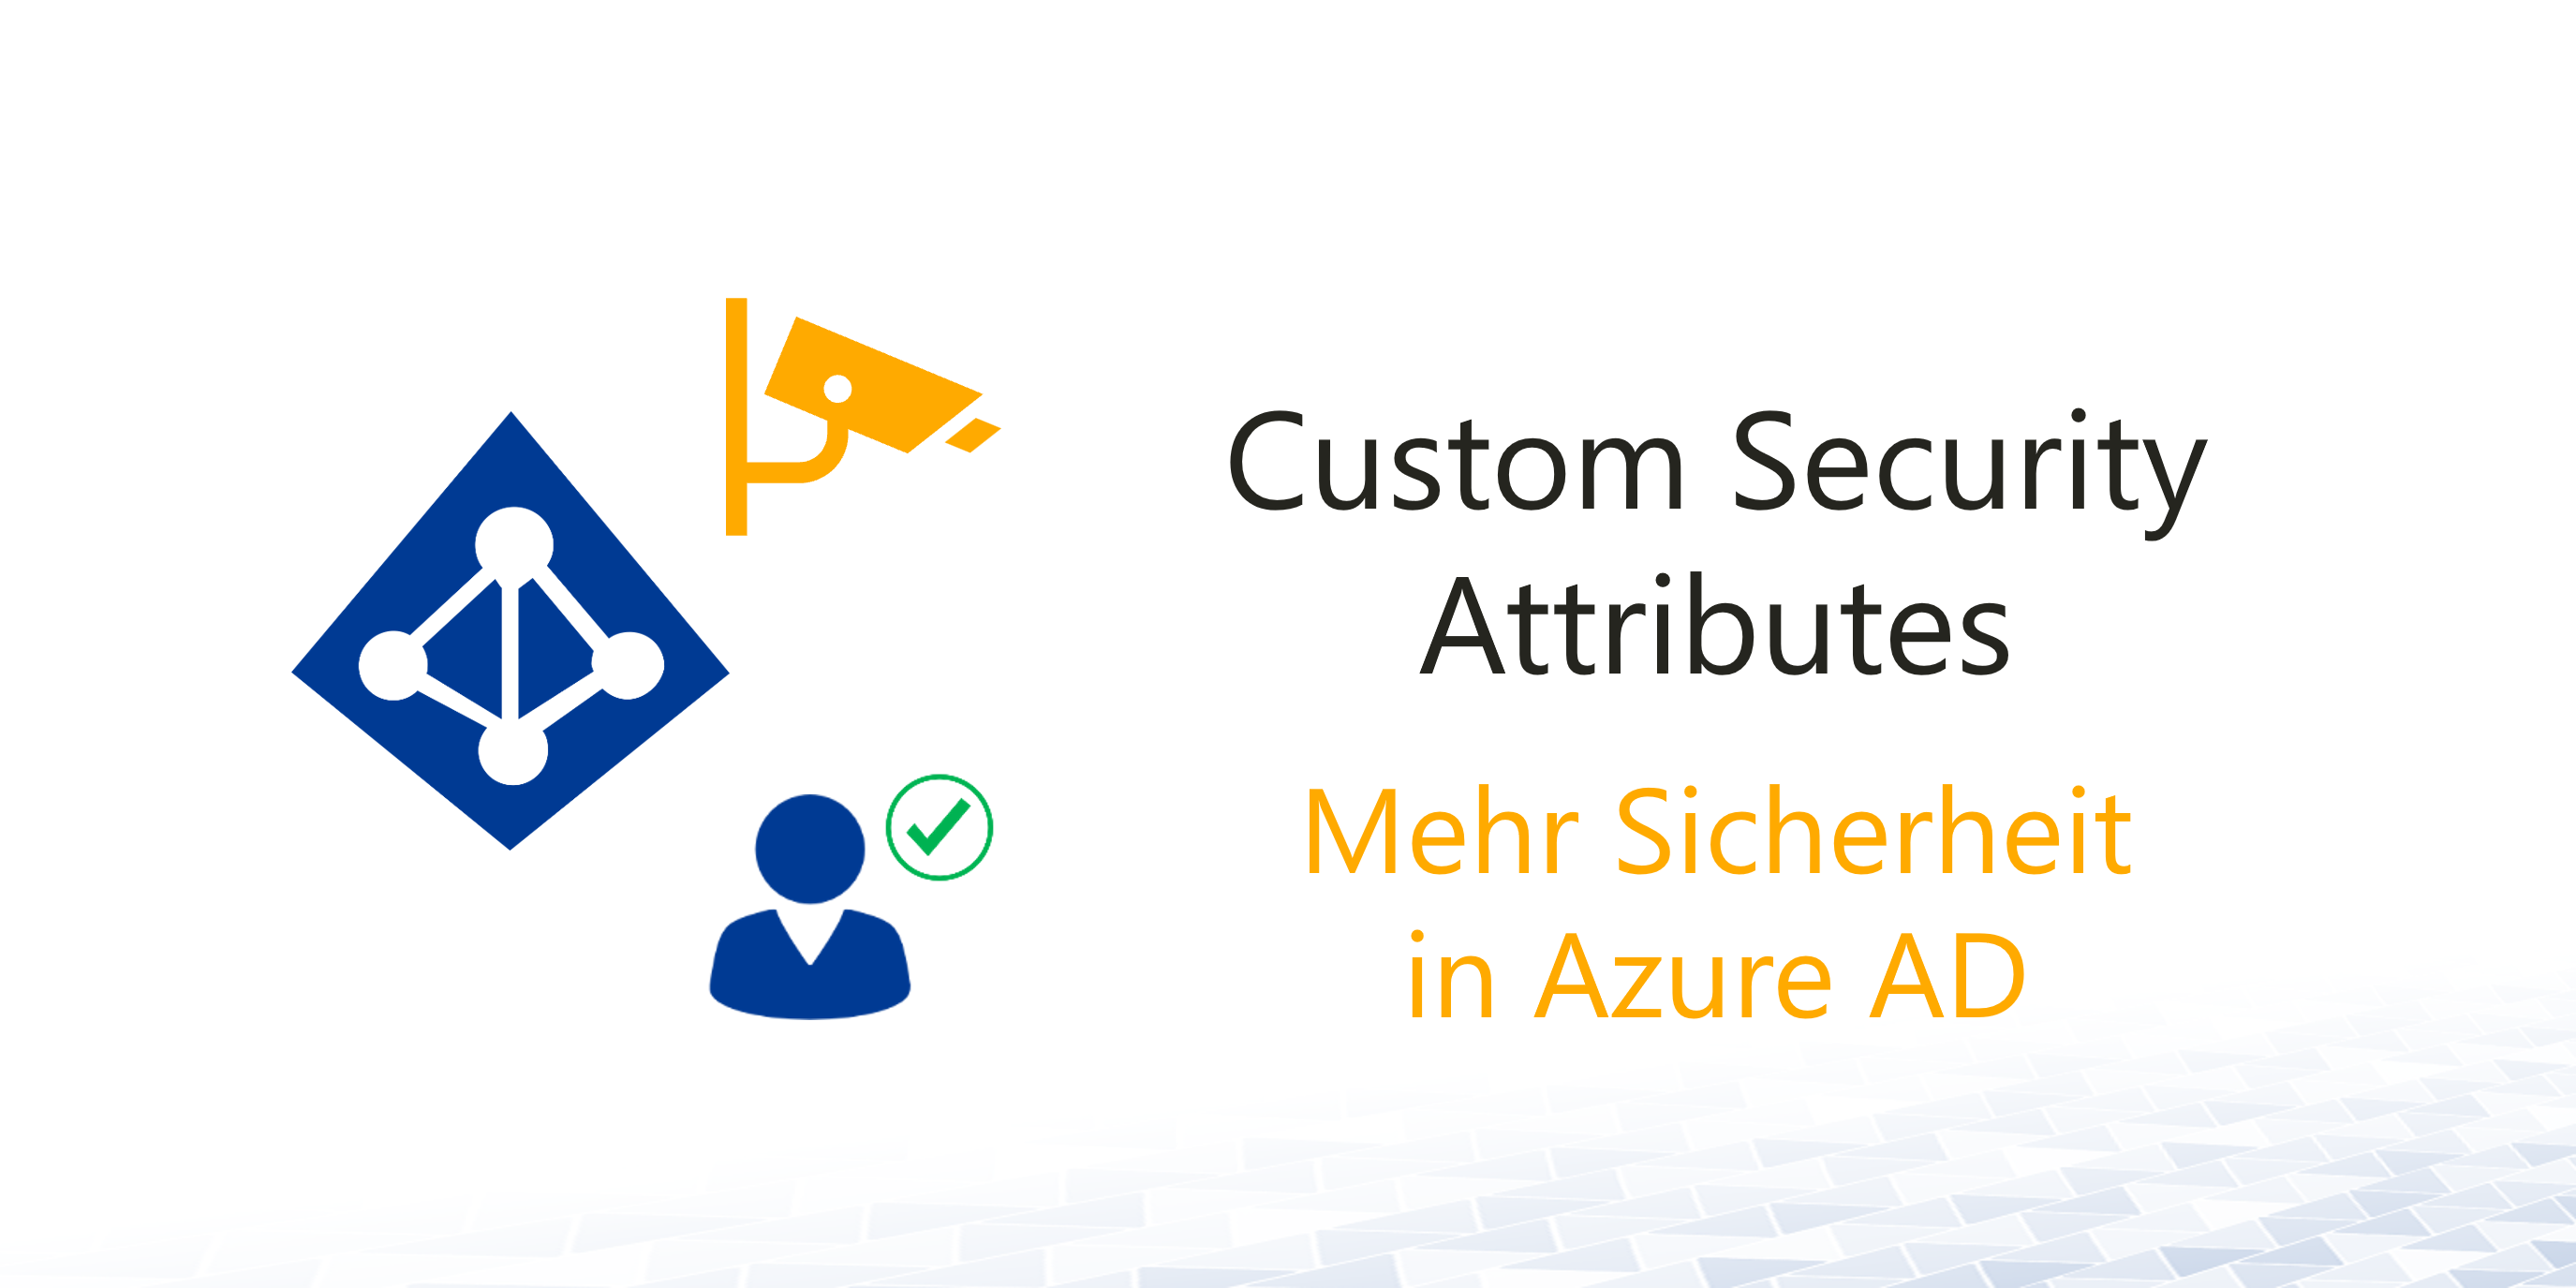 Azure AD Custom Security Attributes ermöglichen flexible Berechtigungsstrukturen